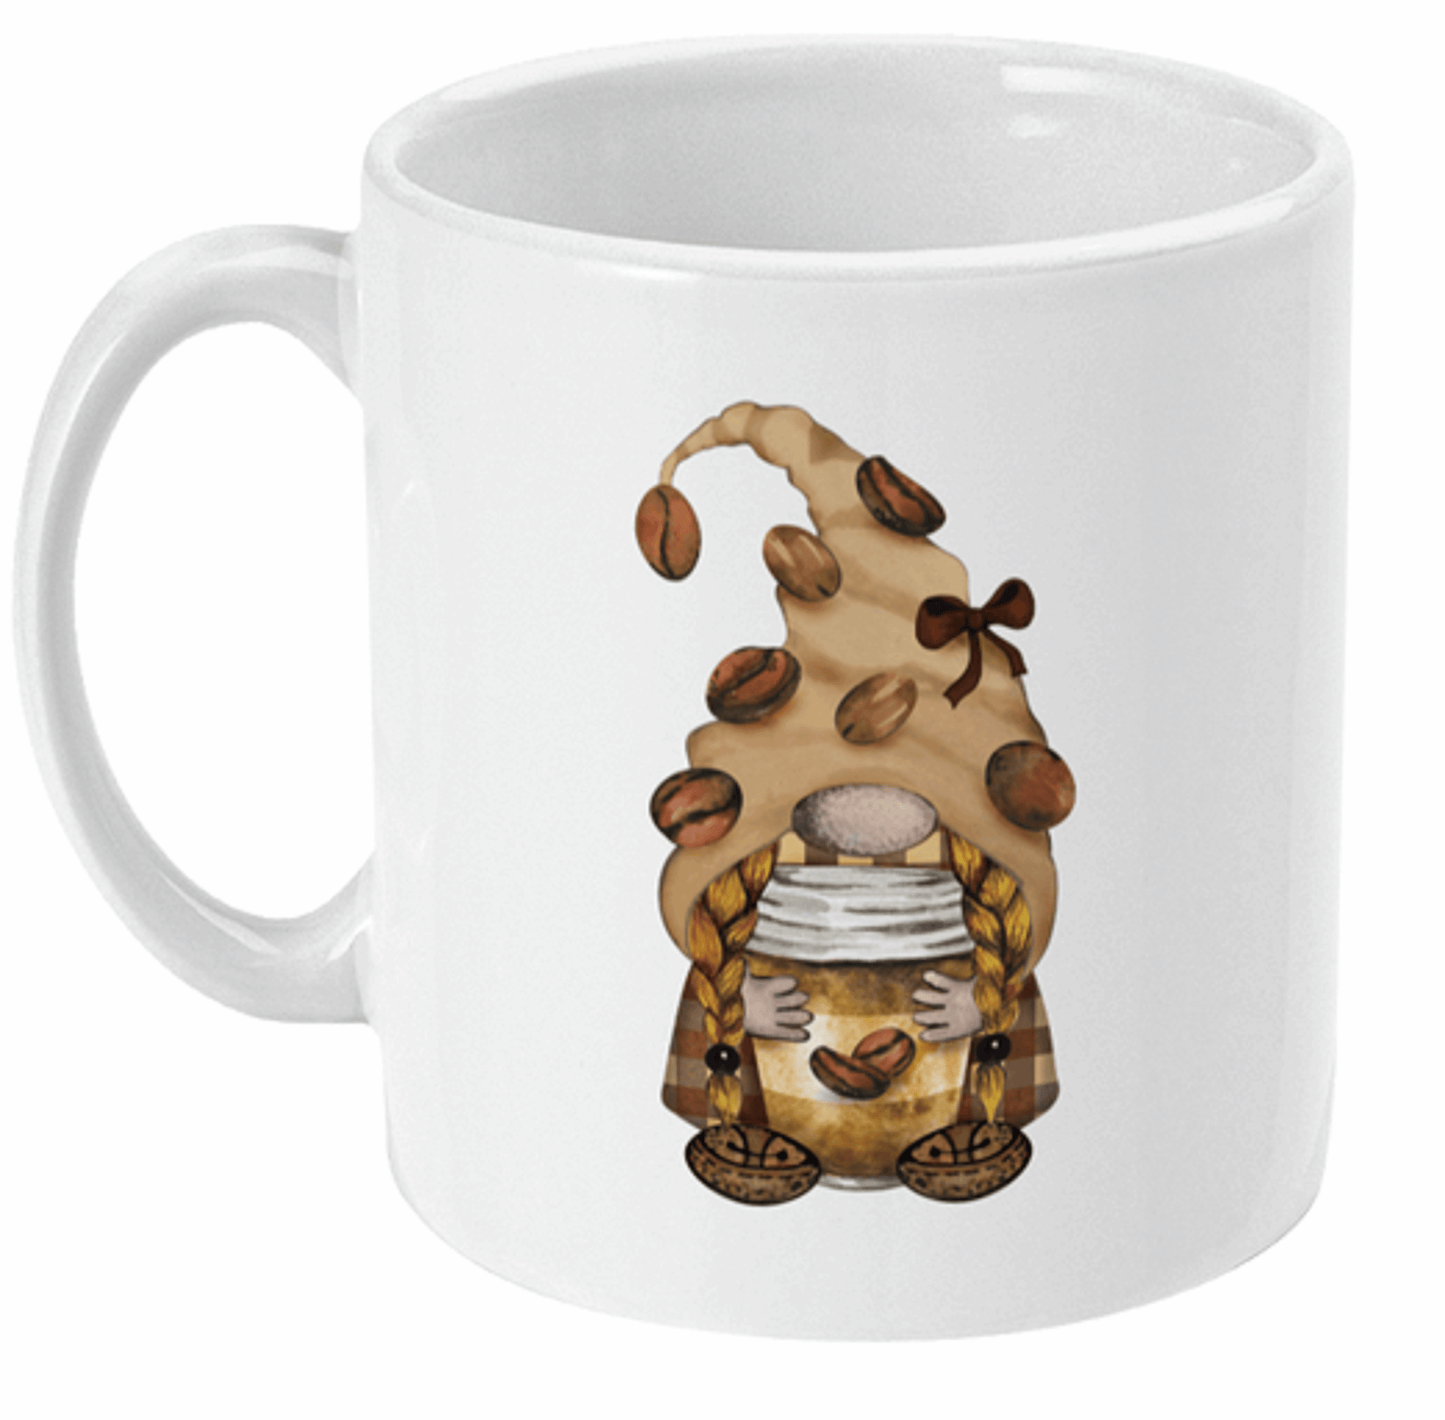  Coffee Gnomes Choice of Two Styles Mug by Free Spirit Accessories sold by Free Spirit Accessories